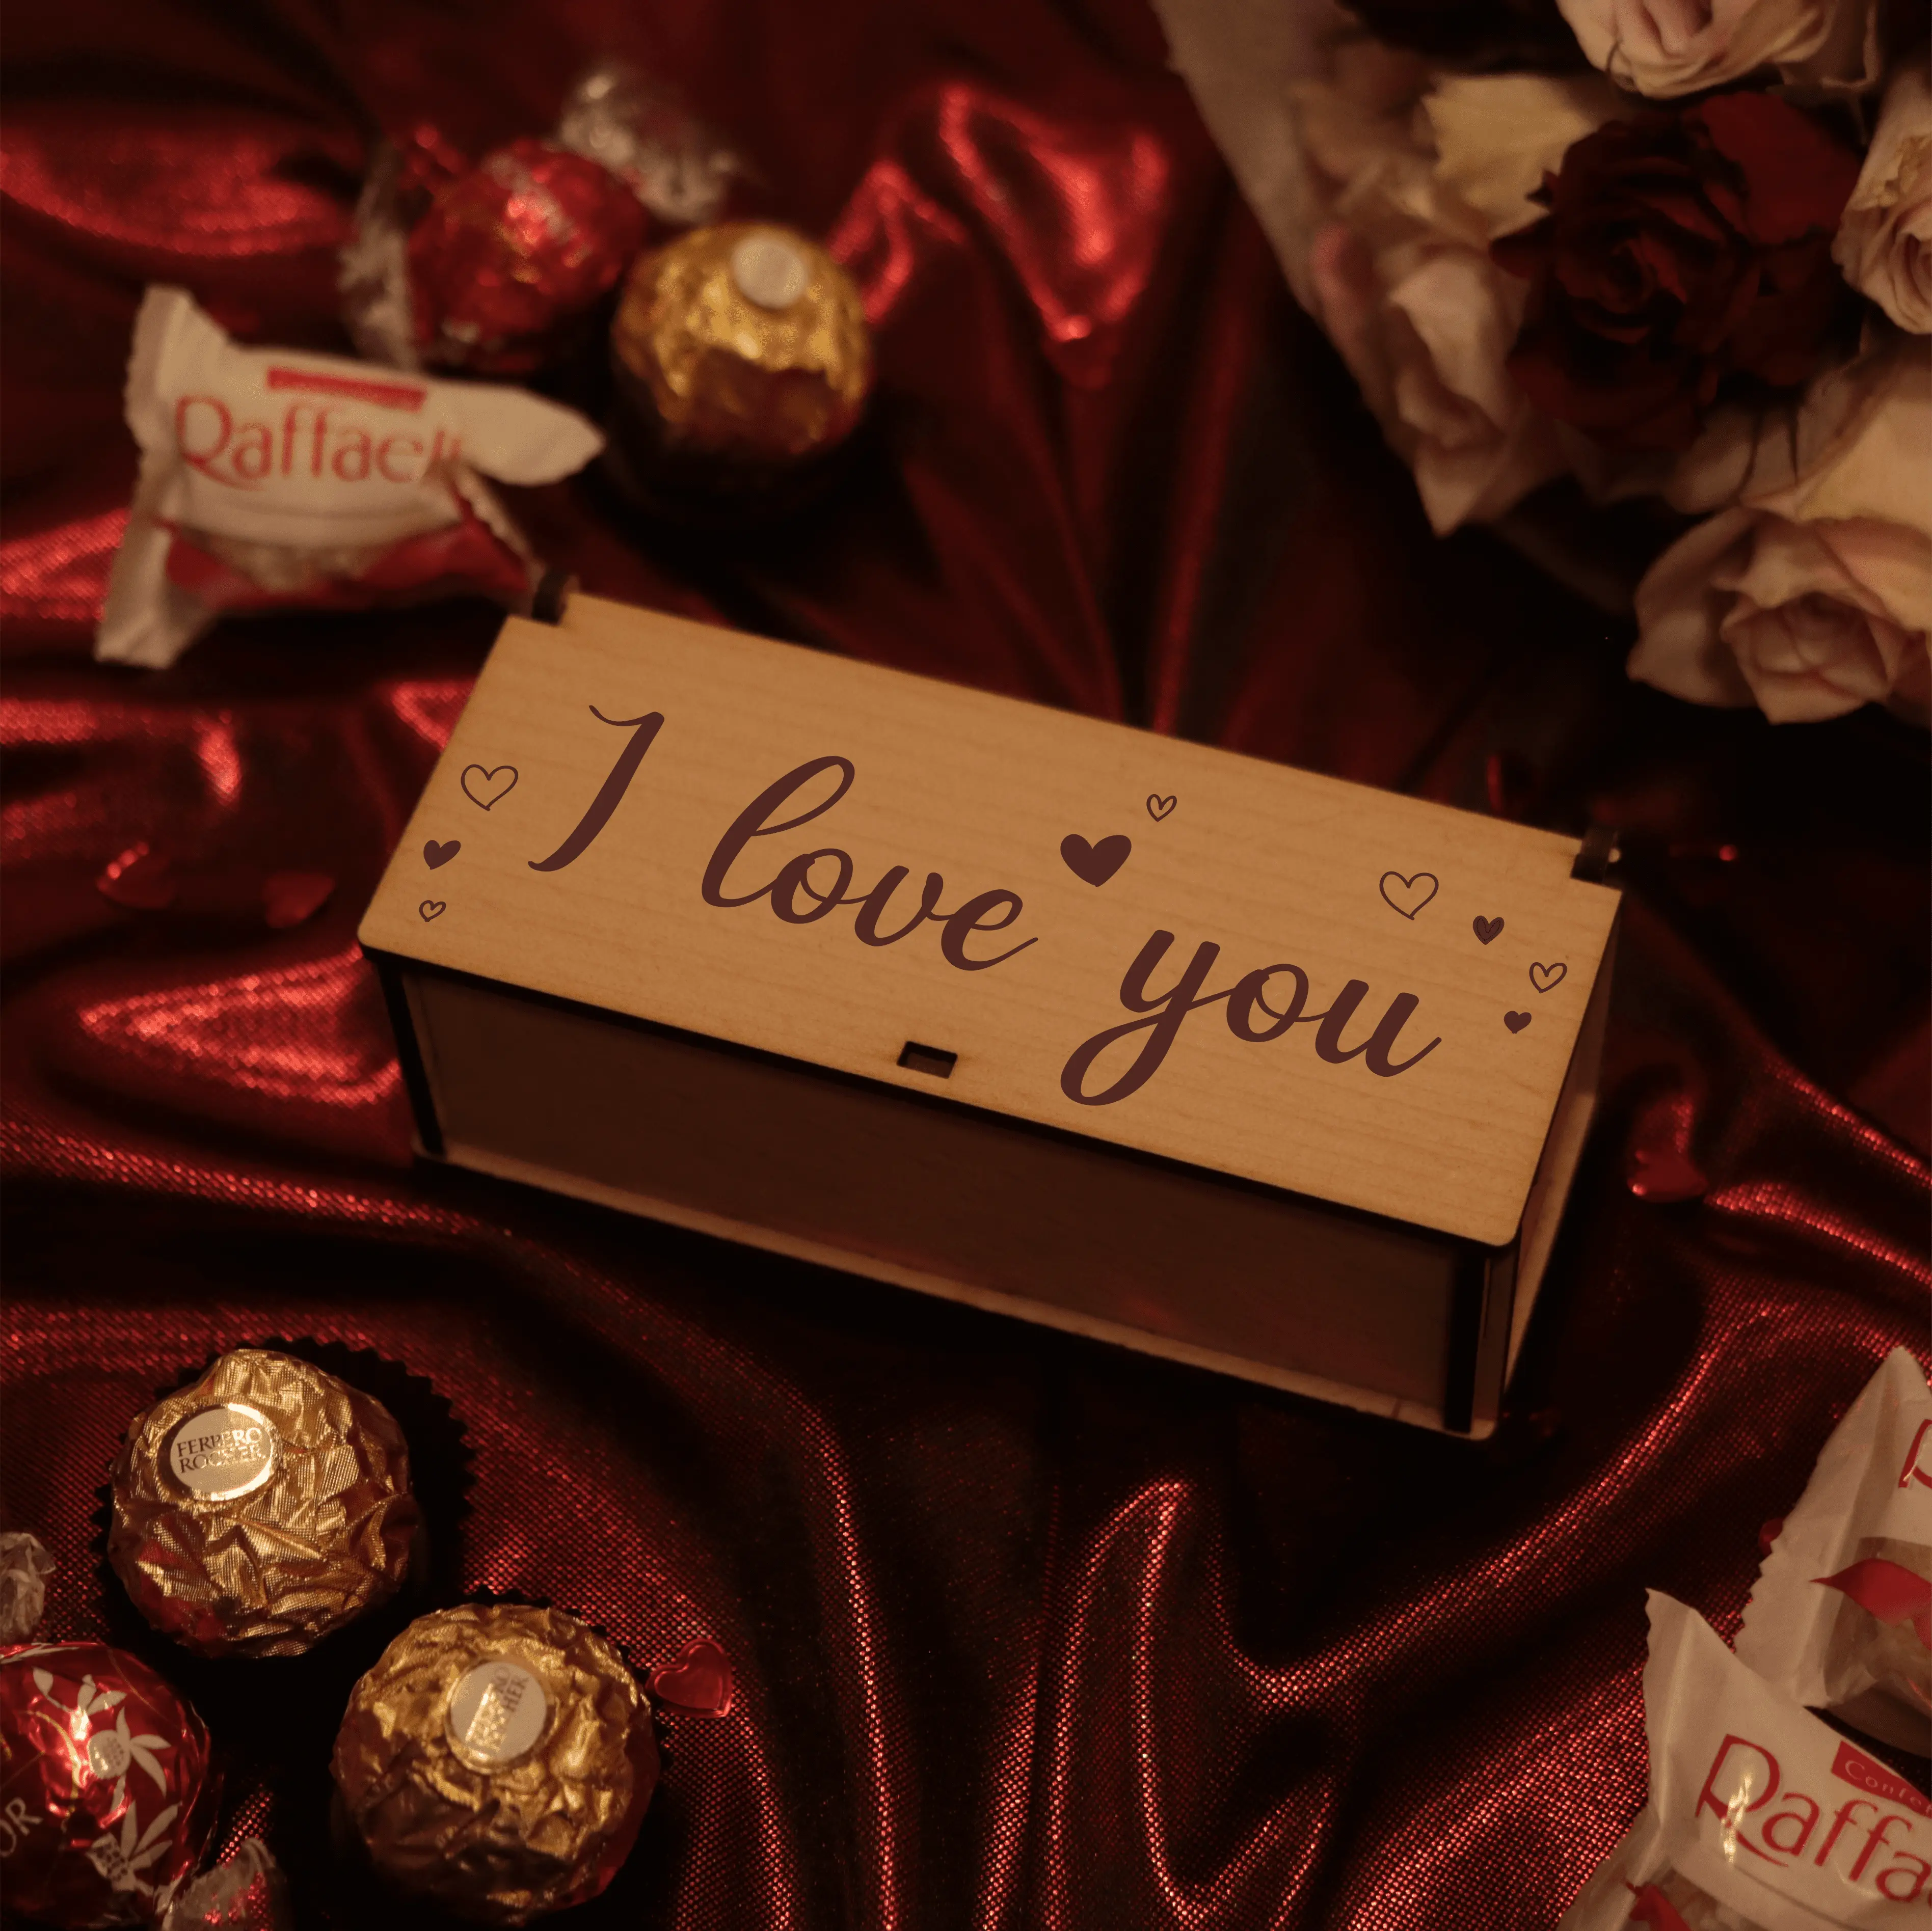 I love you | Holzbox mit Ferrero Rocher